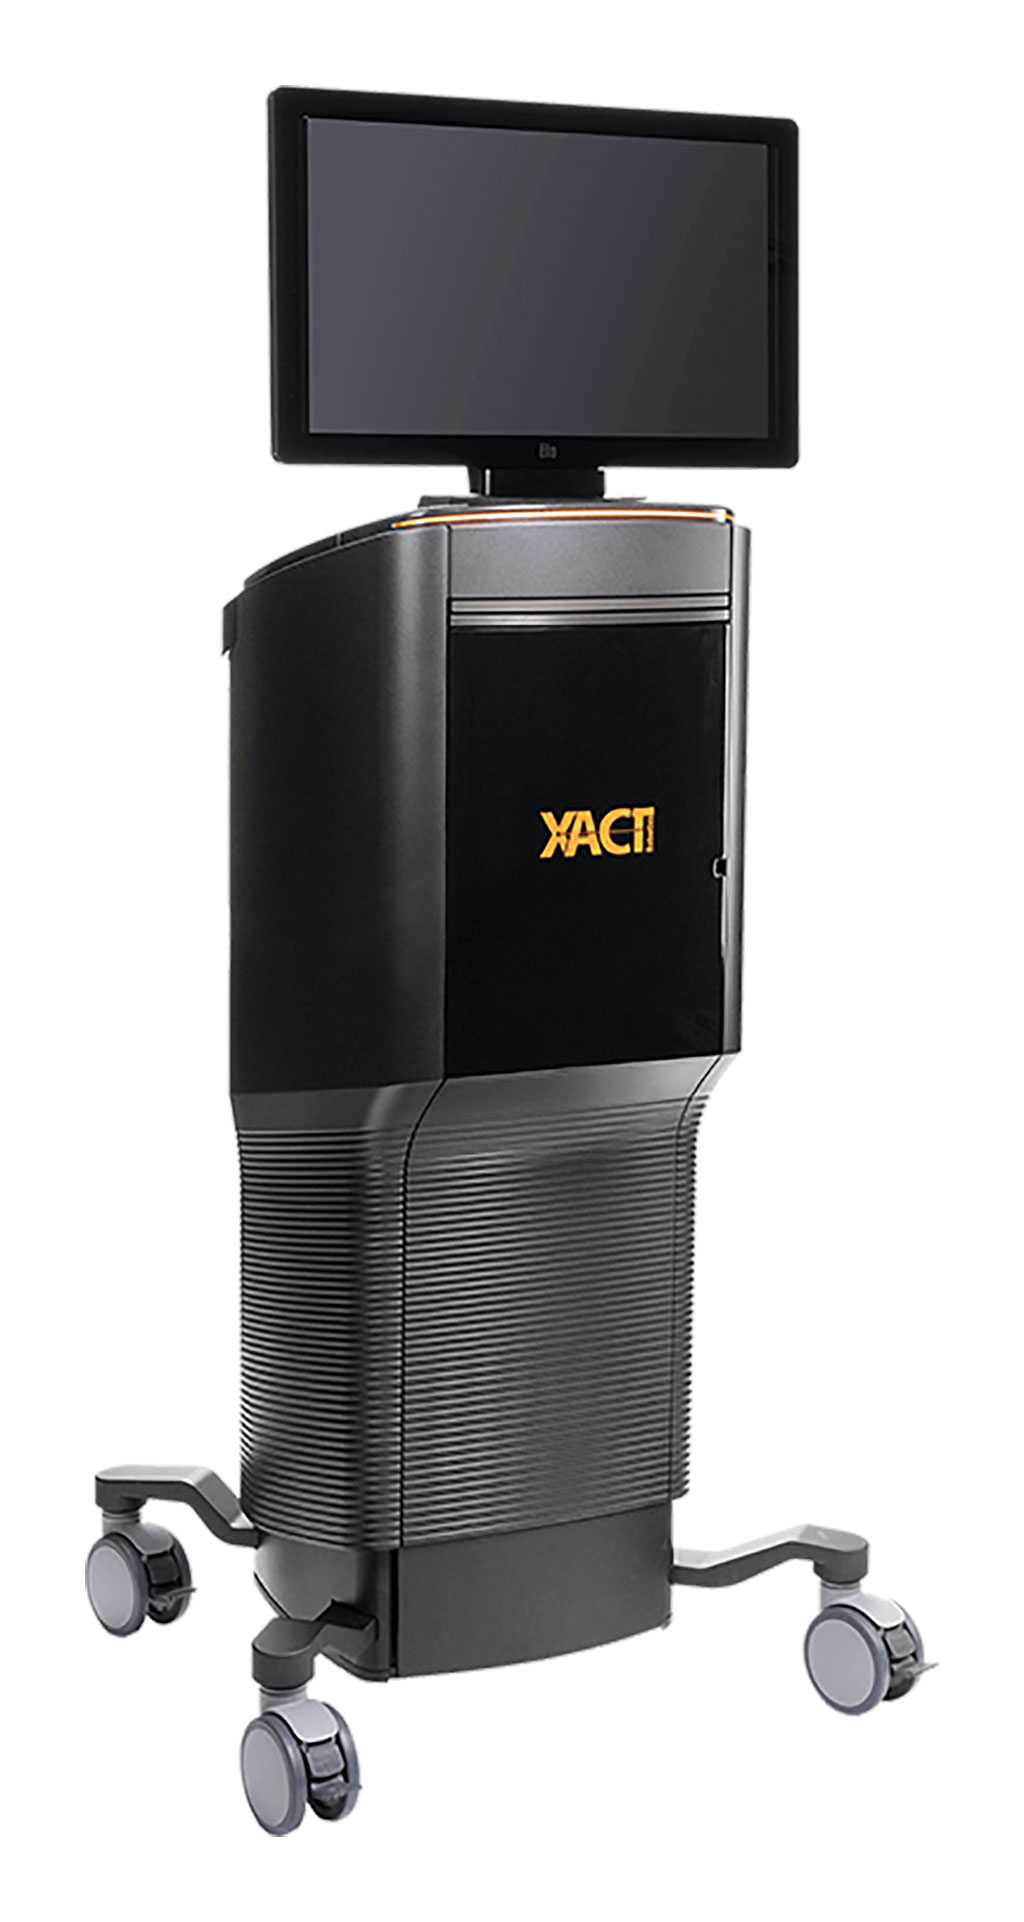 Imagen: Sistema robótico XACT ACE (Fotografía cortesía de XACT Robotics)